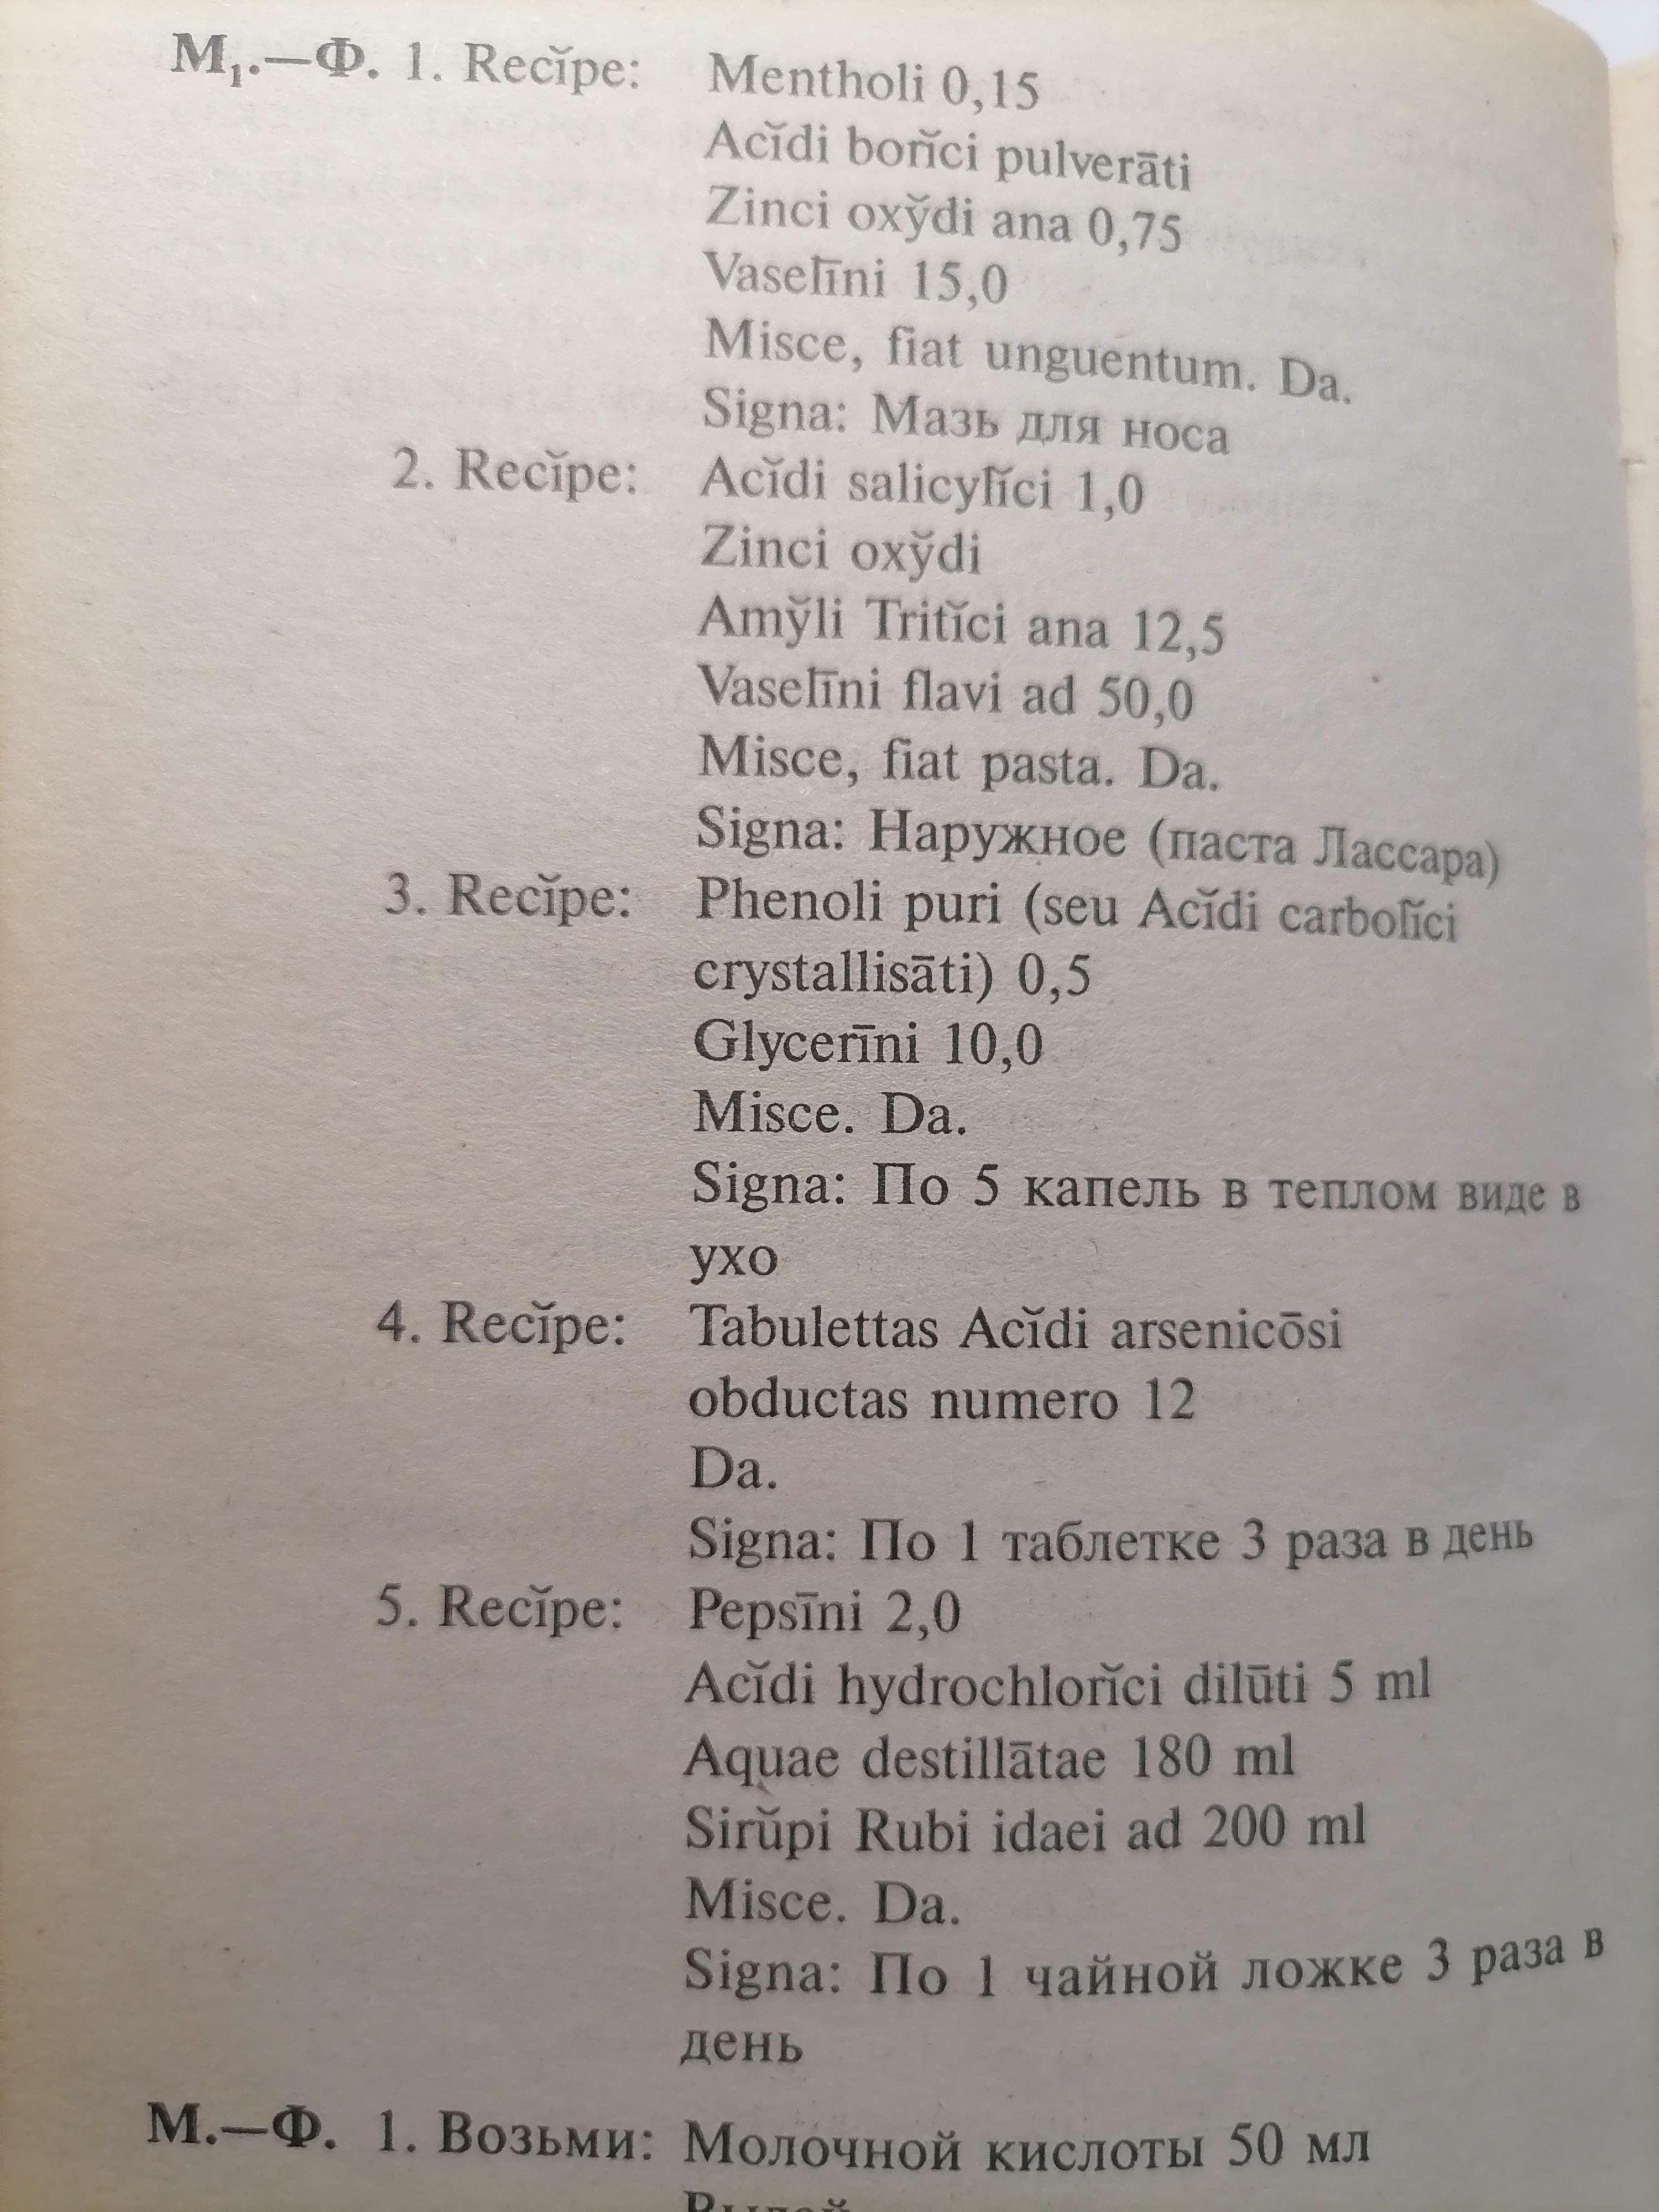 Перевести рецепты на латинский